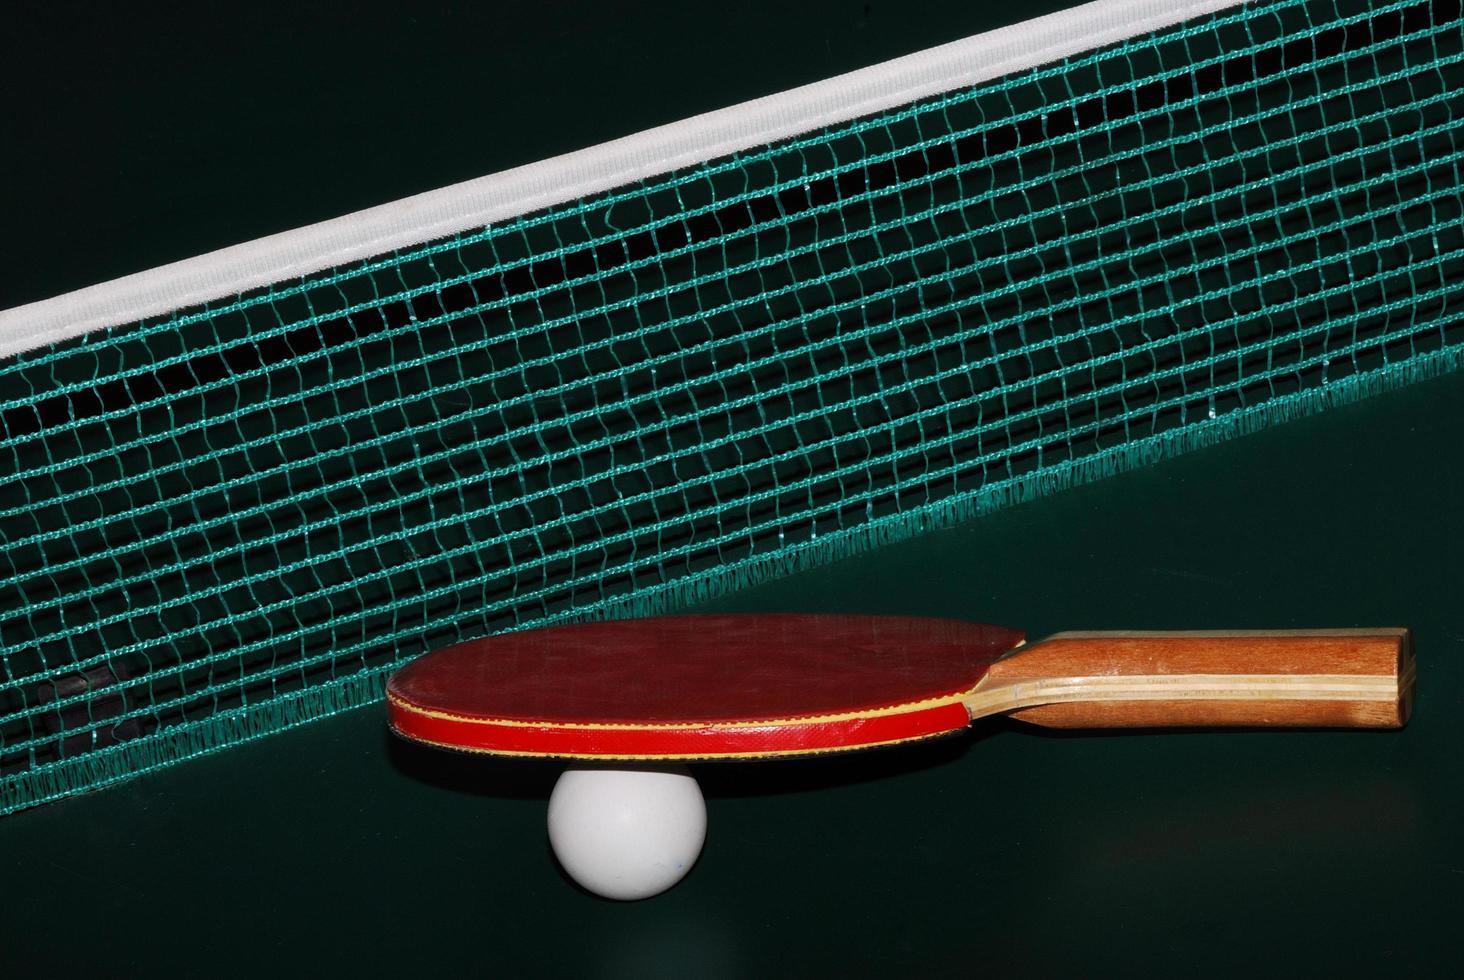 Pelota de raqueta de tenis de mesa y red en la mesa de tenis de mesa cerca foto